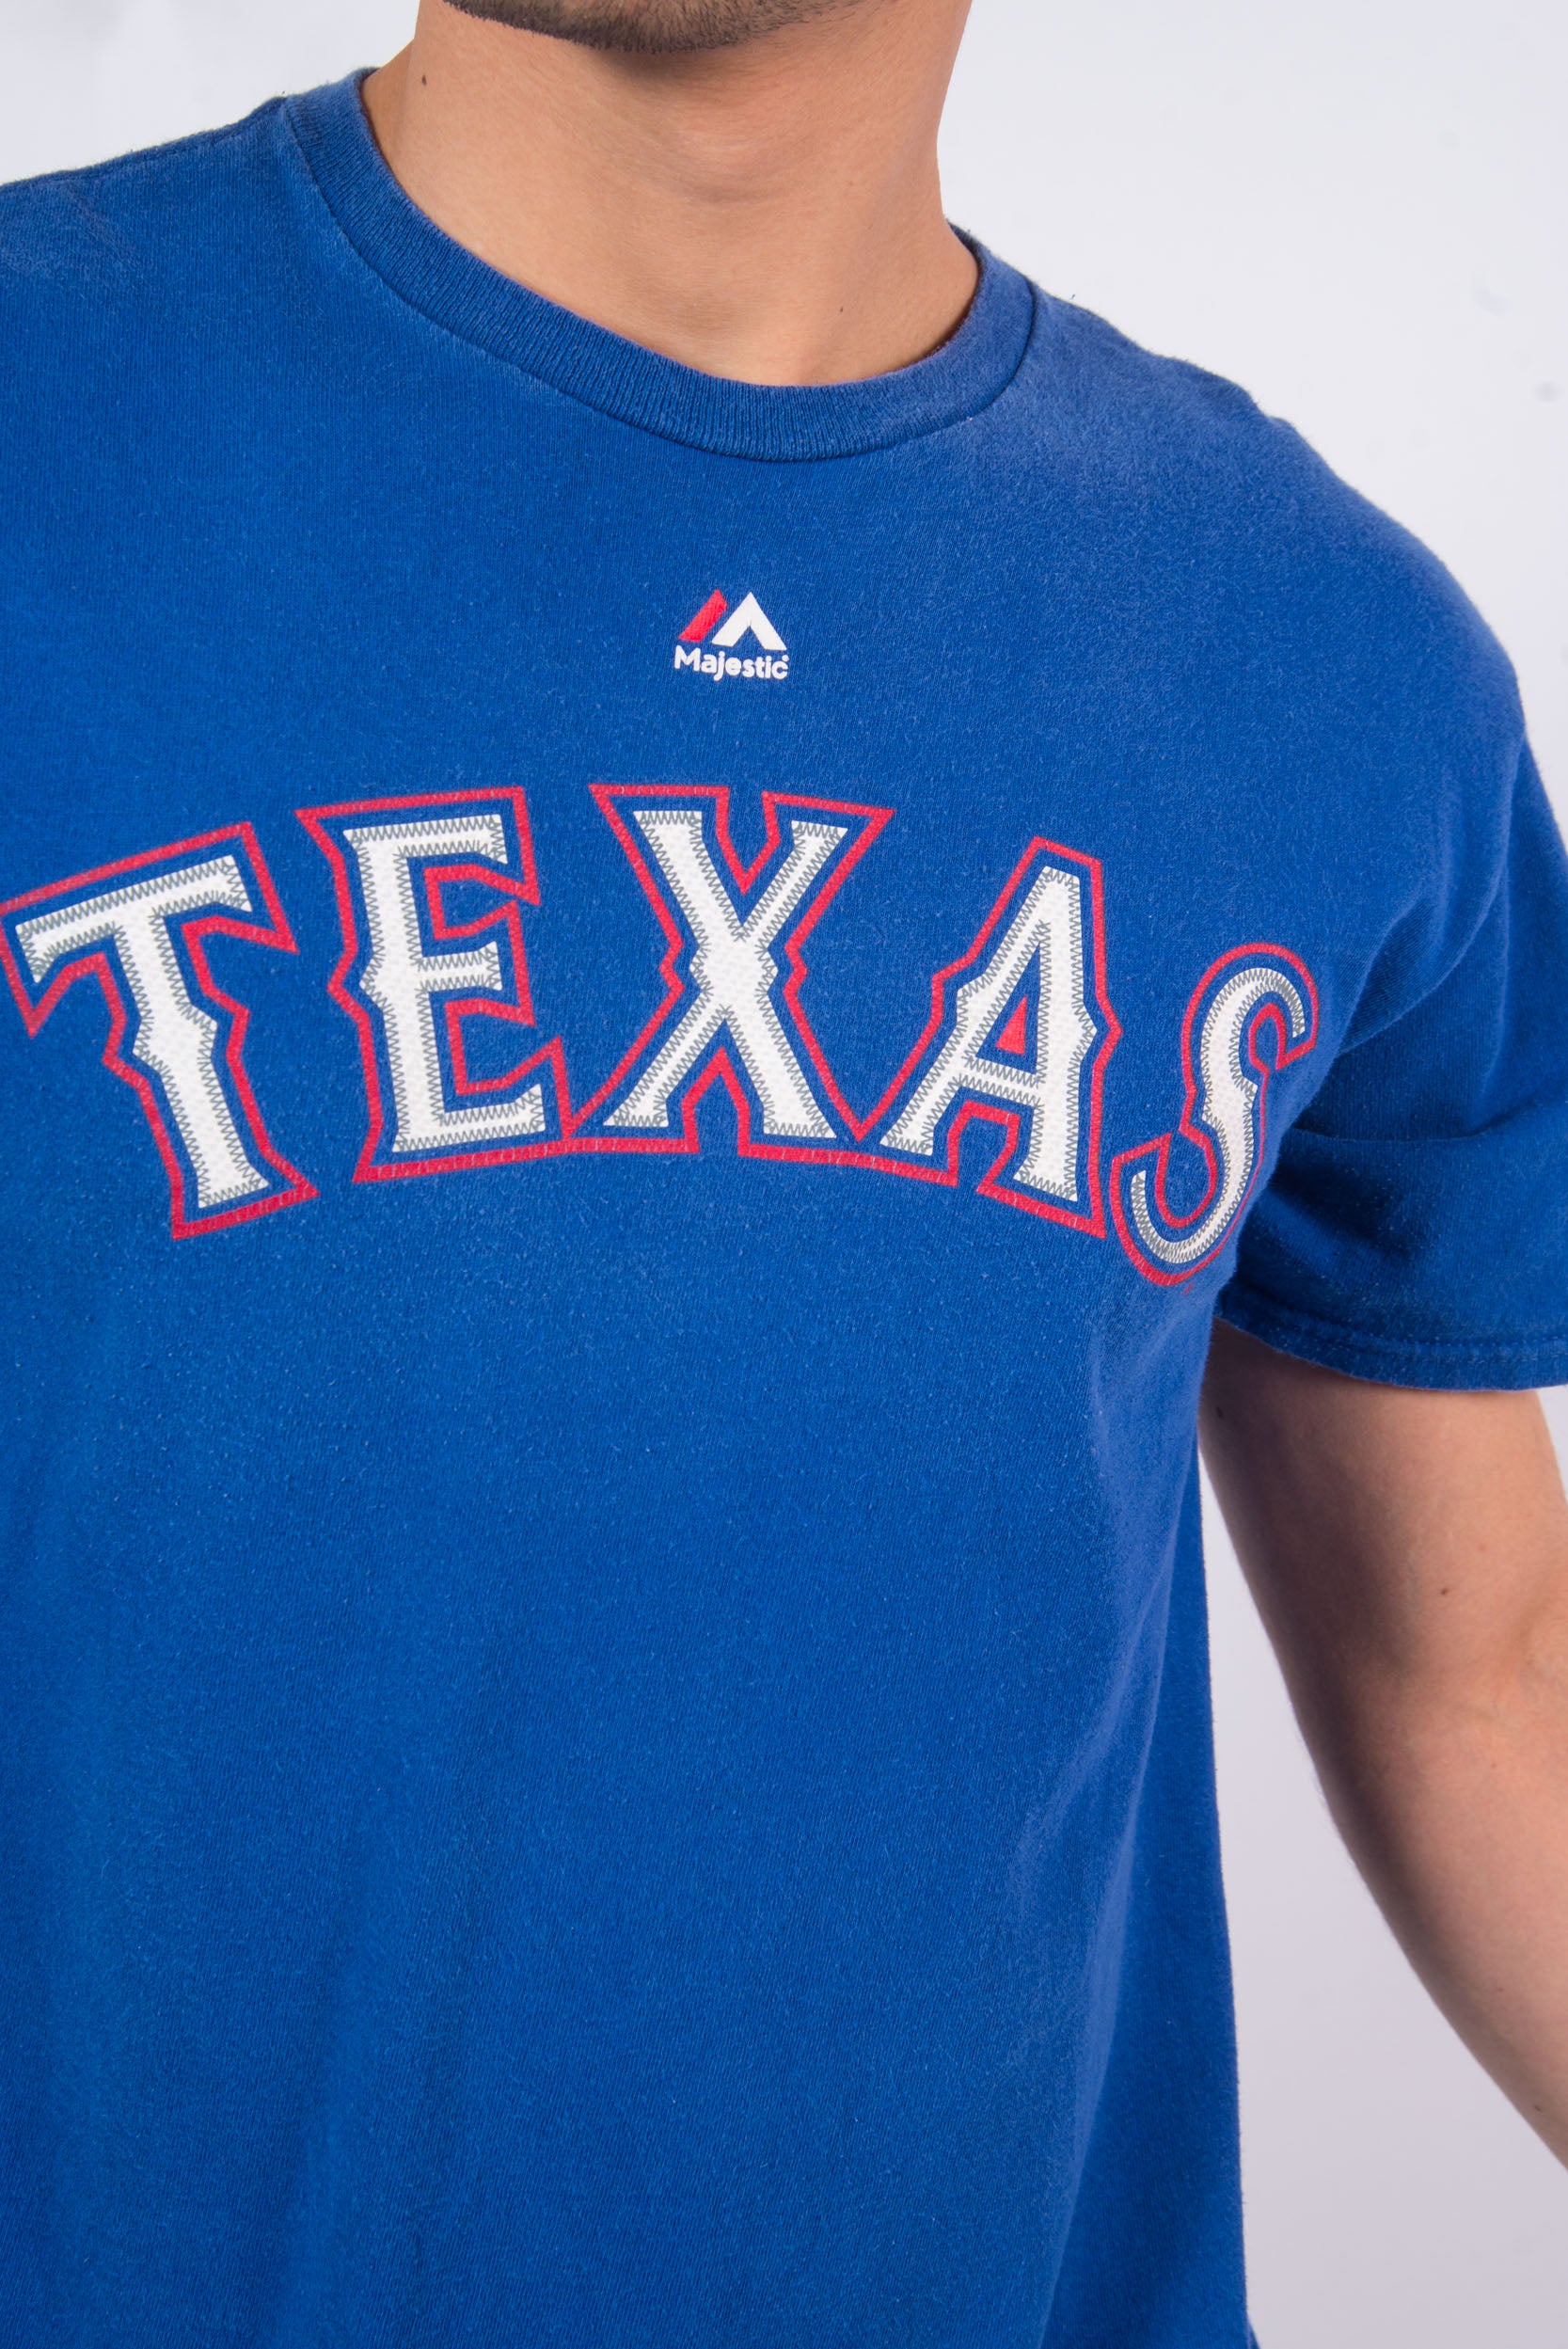 texas rangers playoff shirts